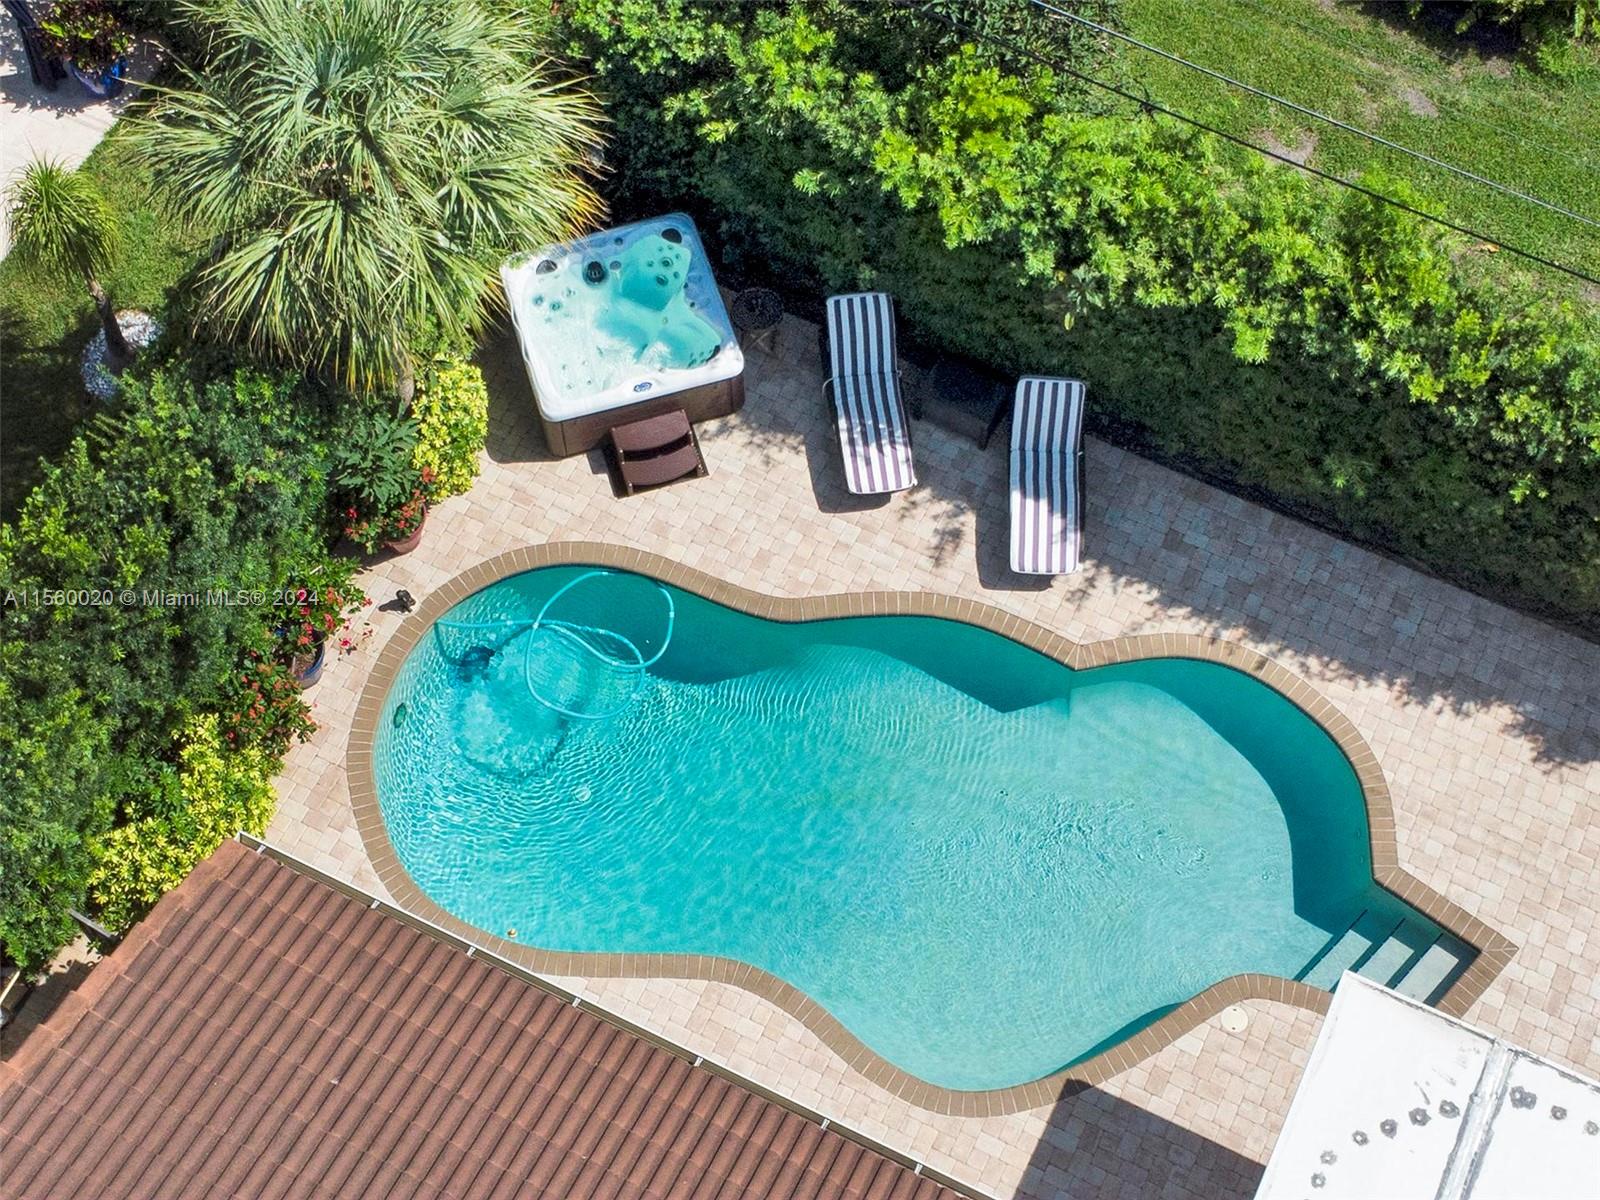 Property for Sale at 3204 Barton Rd Rd, Pompano Beach, Broward County, Florida - Bedrooms: 3 
Bathrooms: 2  - $1,299,000